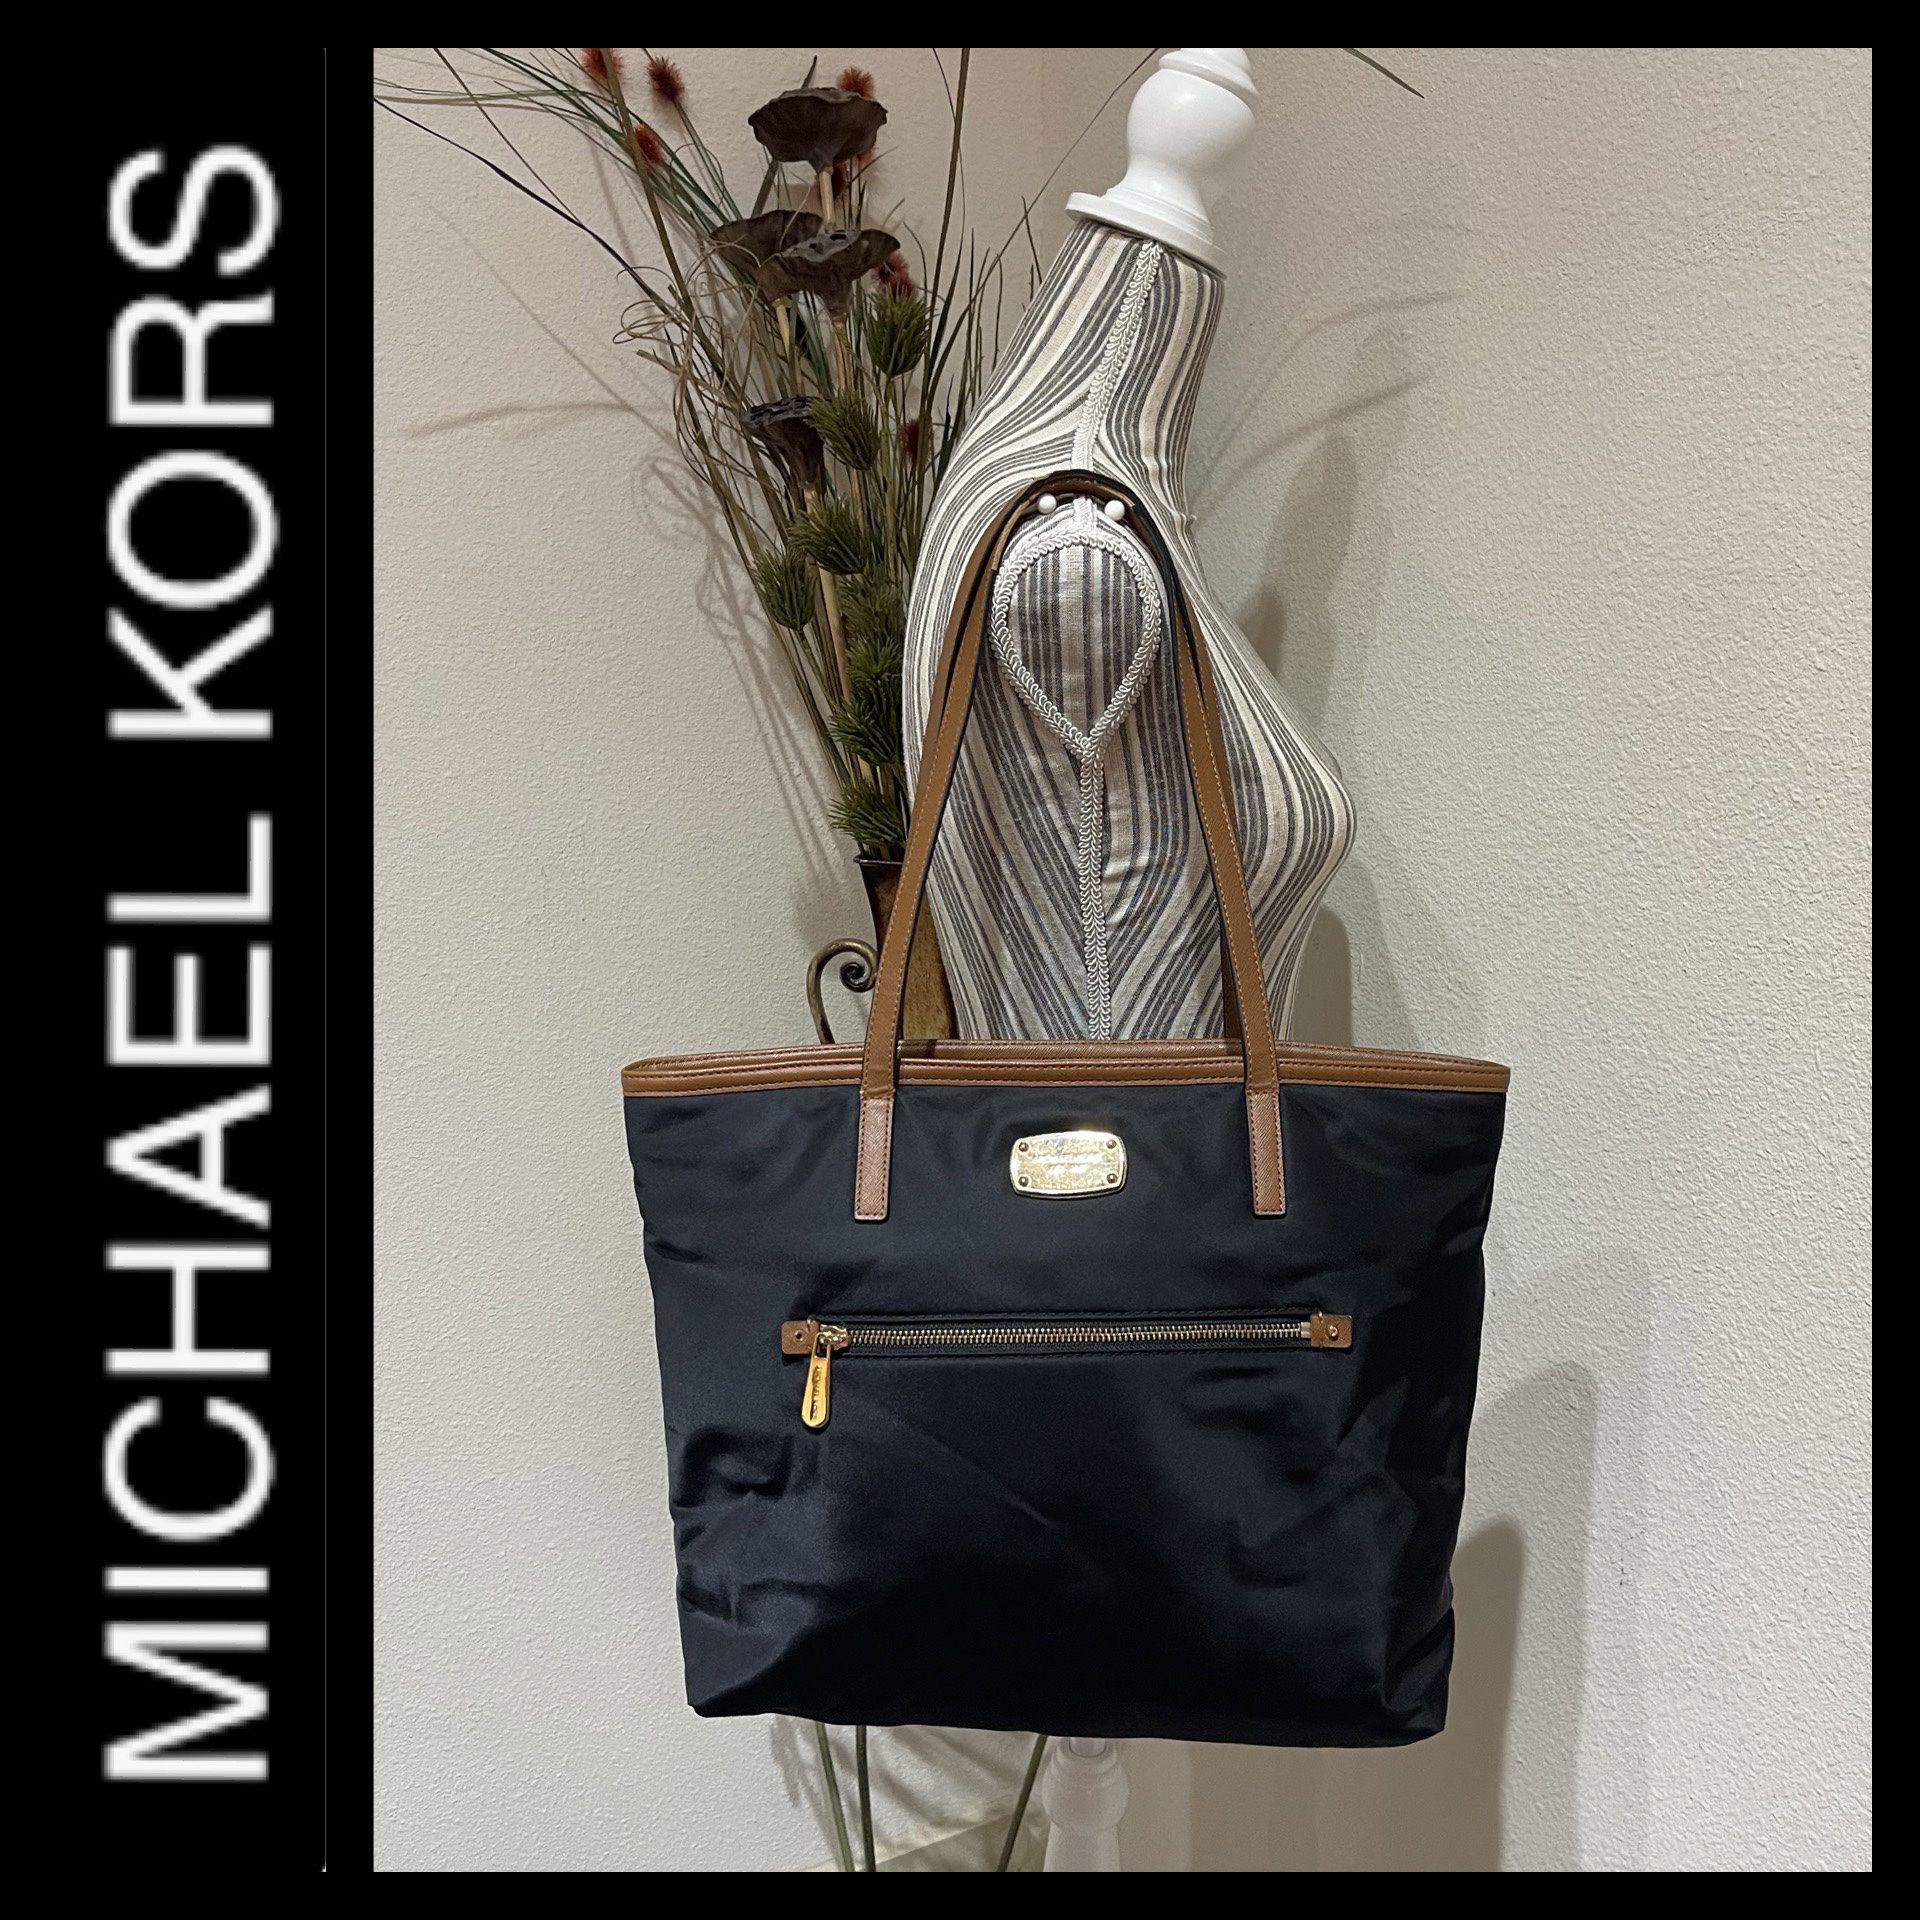 Michael Kors Tote Bag for Sale in Jacksonville, FL - OfferUp